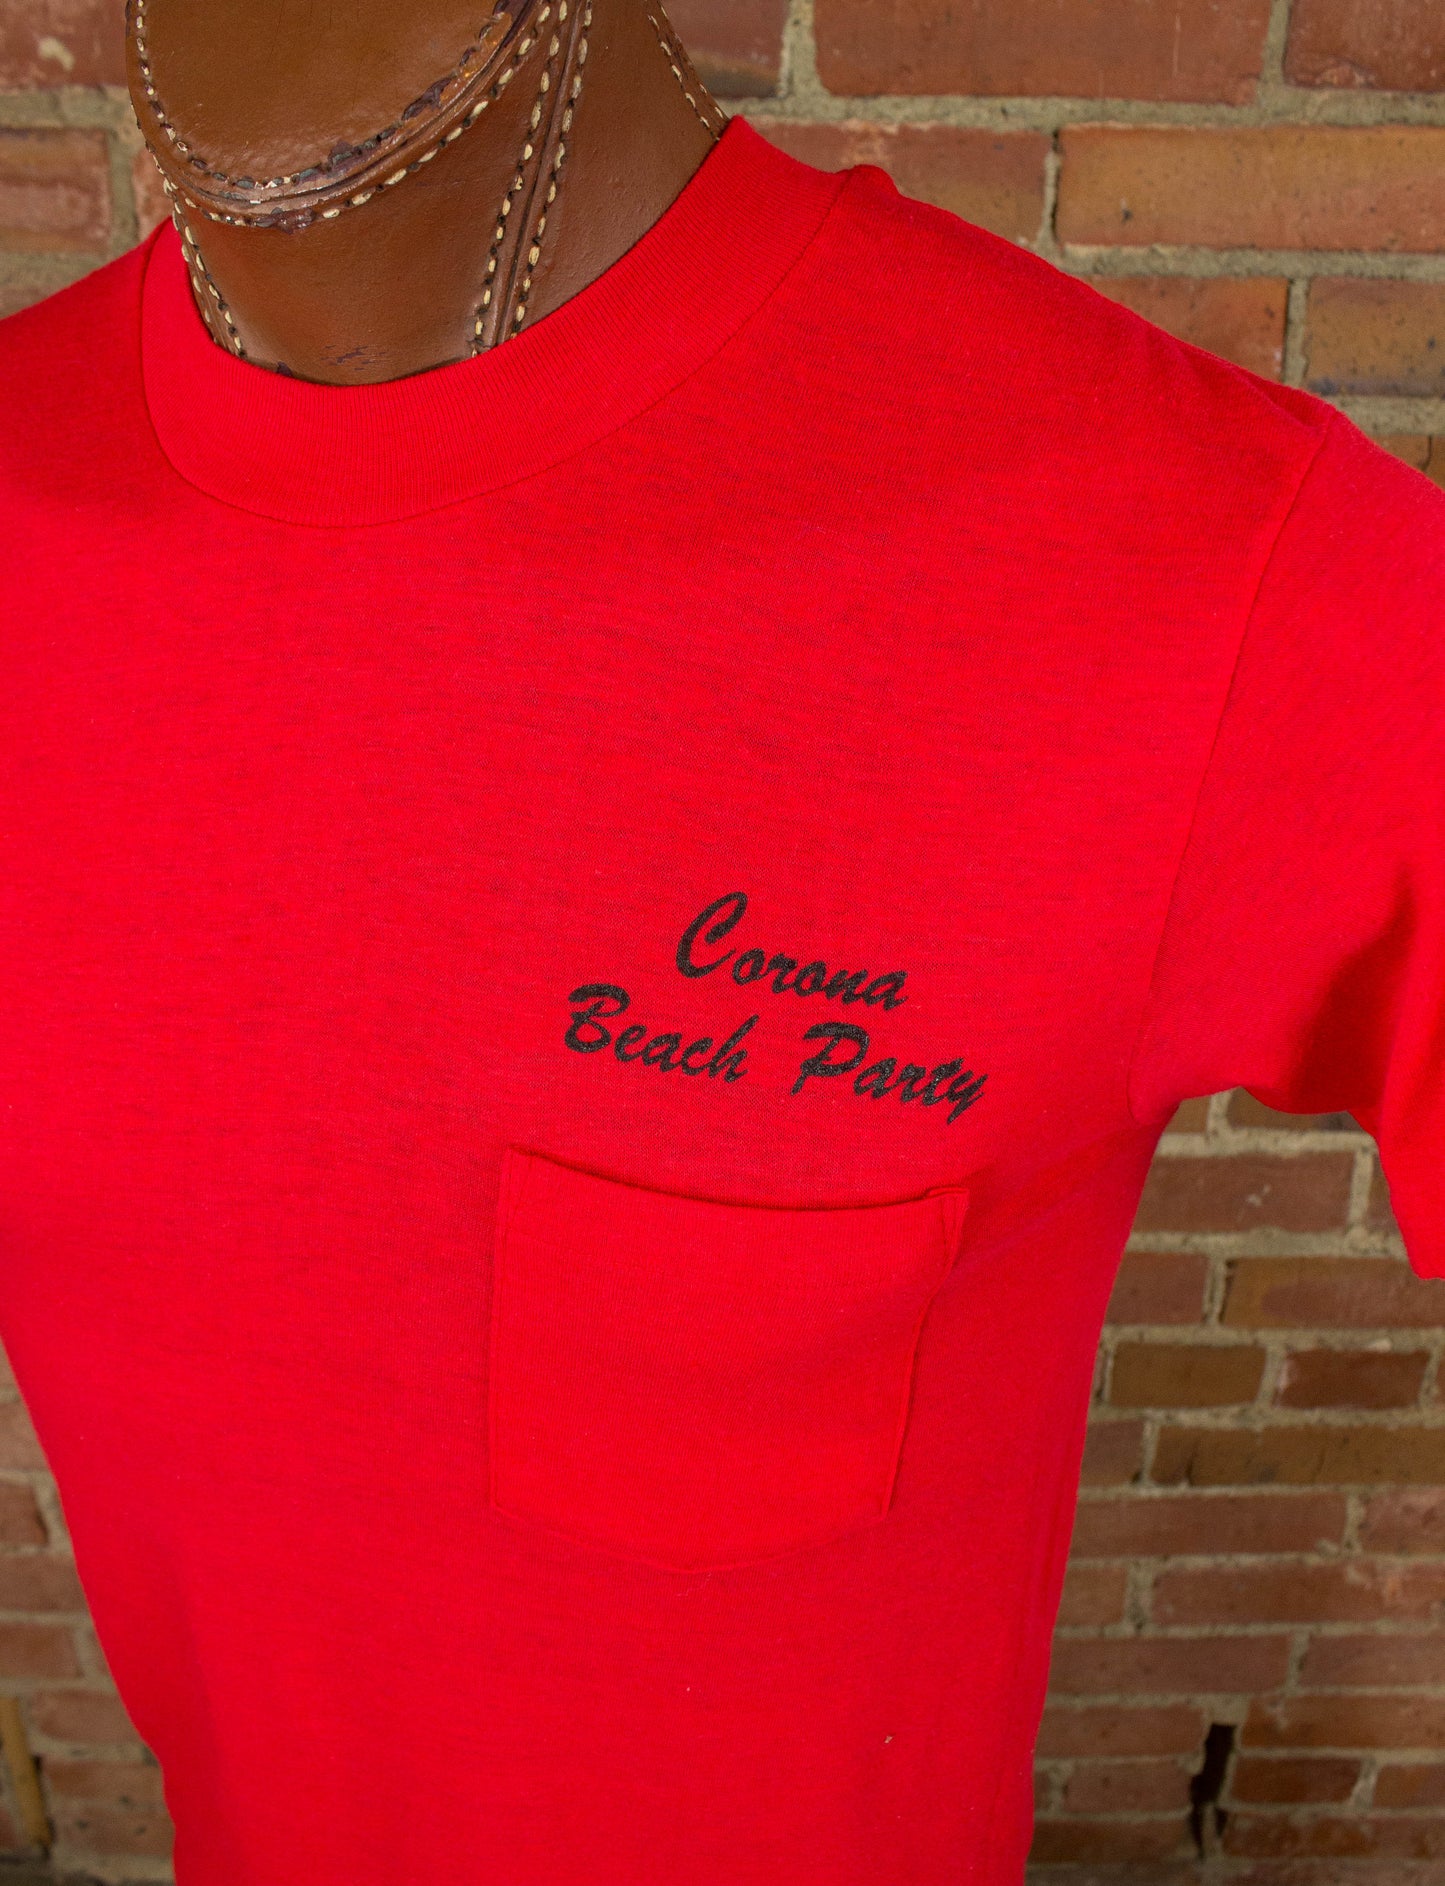 Vintage 80s Corona Beach Party Member Puff Print Red Pocket Tee Graphic T Shirt Unisex Medium